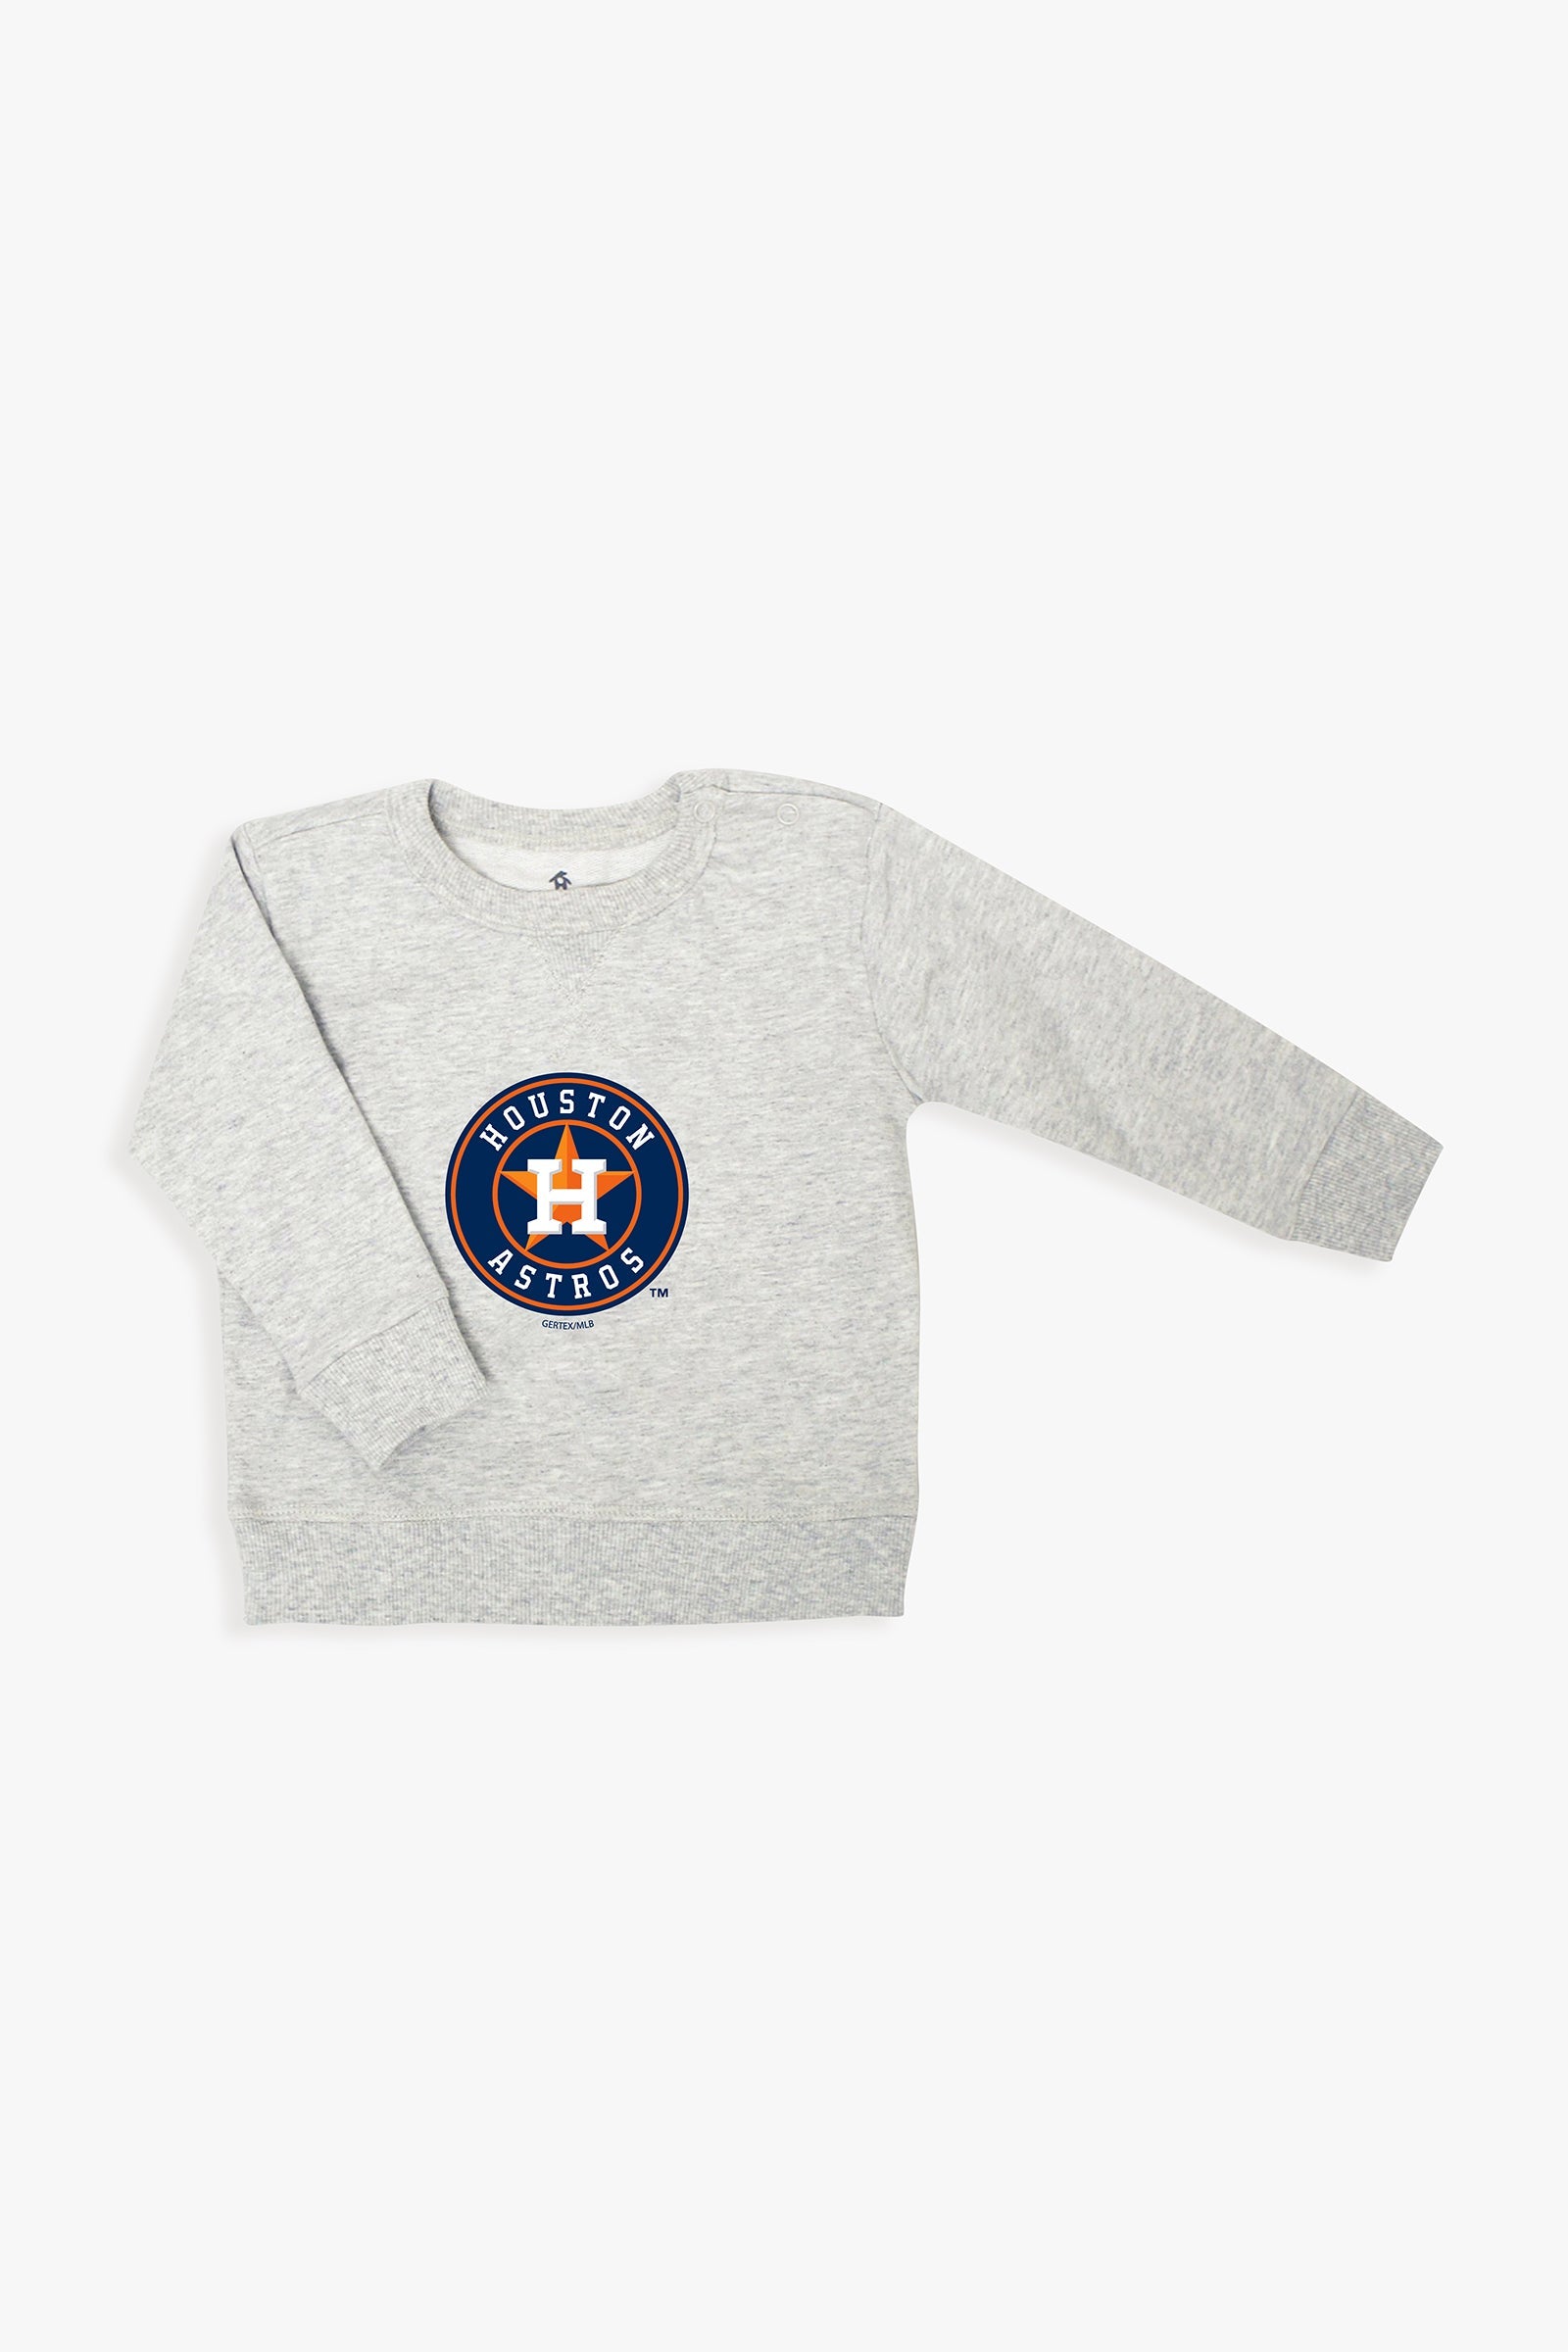 MLB Unisex Baby French Terry Crewneck Sweatshirt